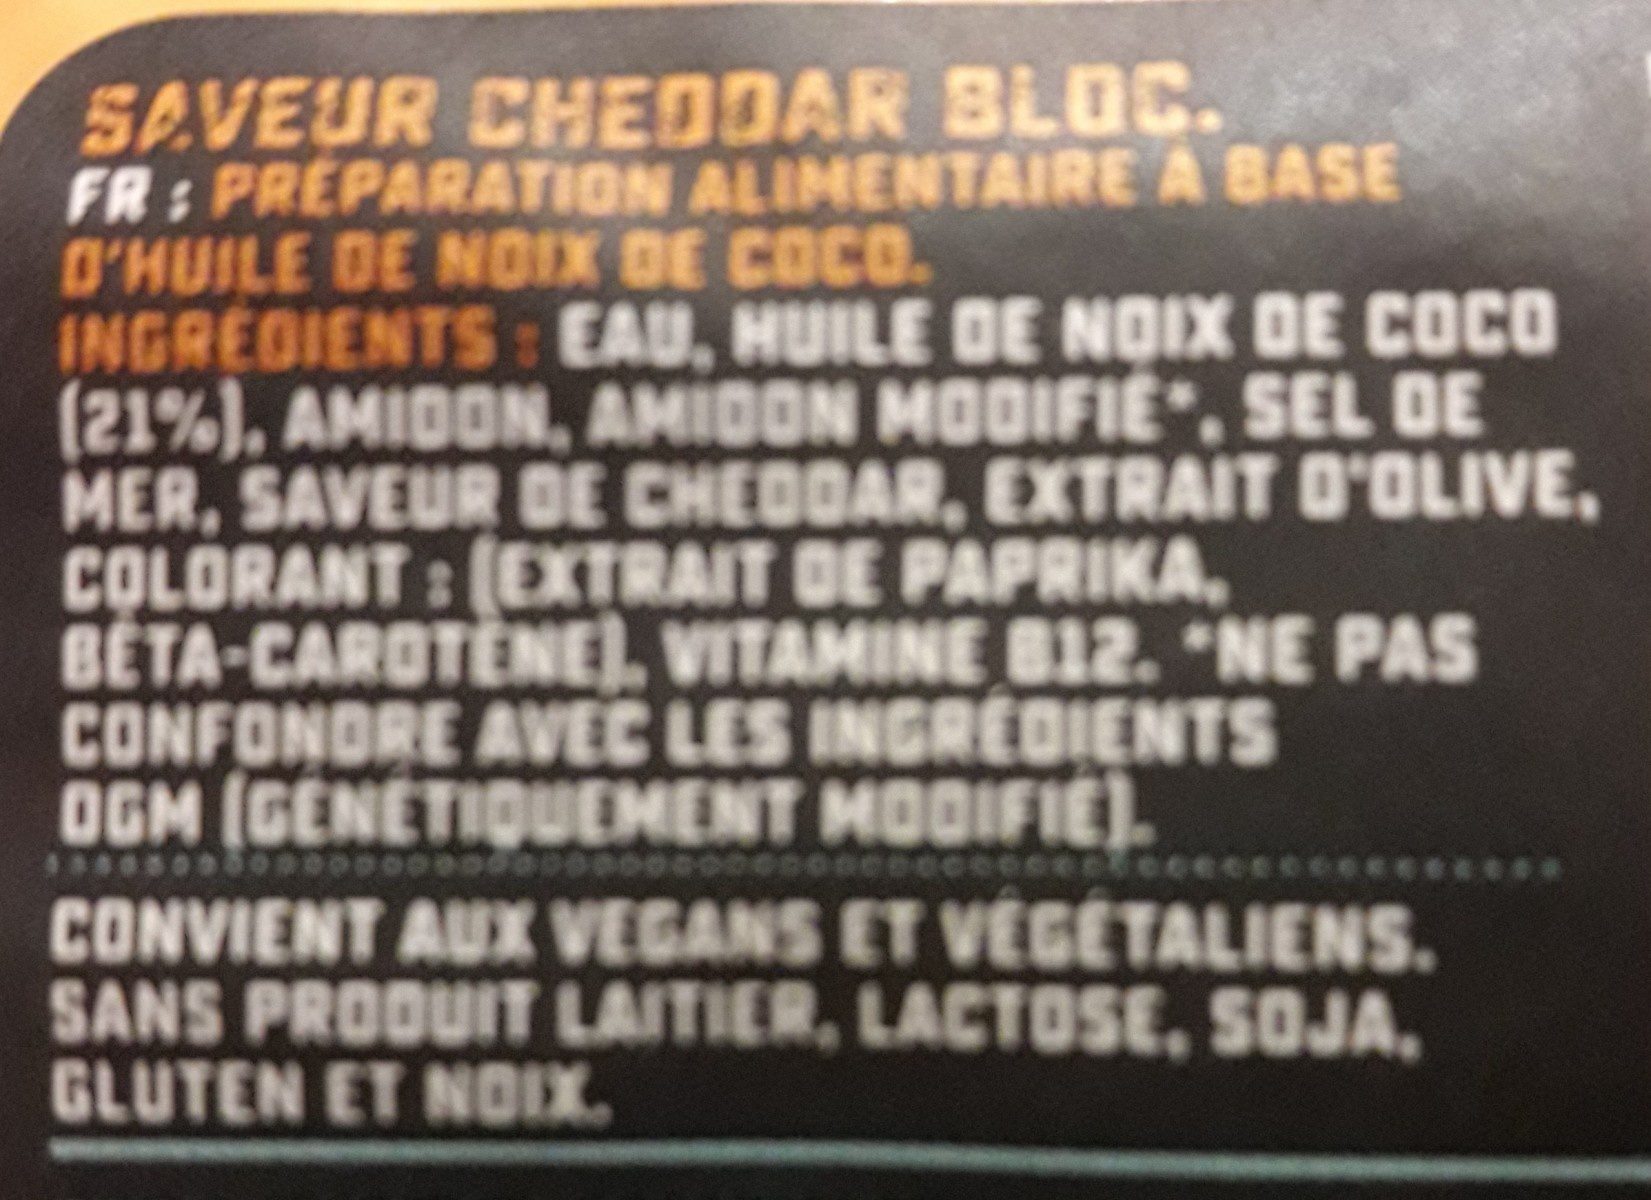 Bloc saveur cheddar - Ingredients - fr